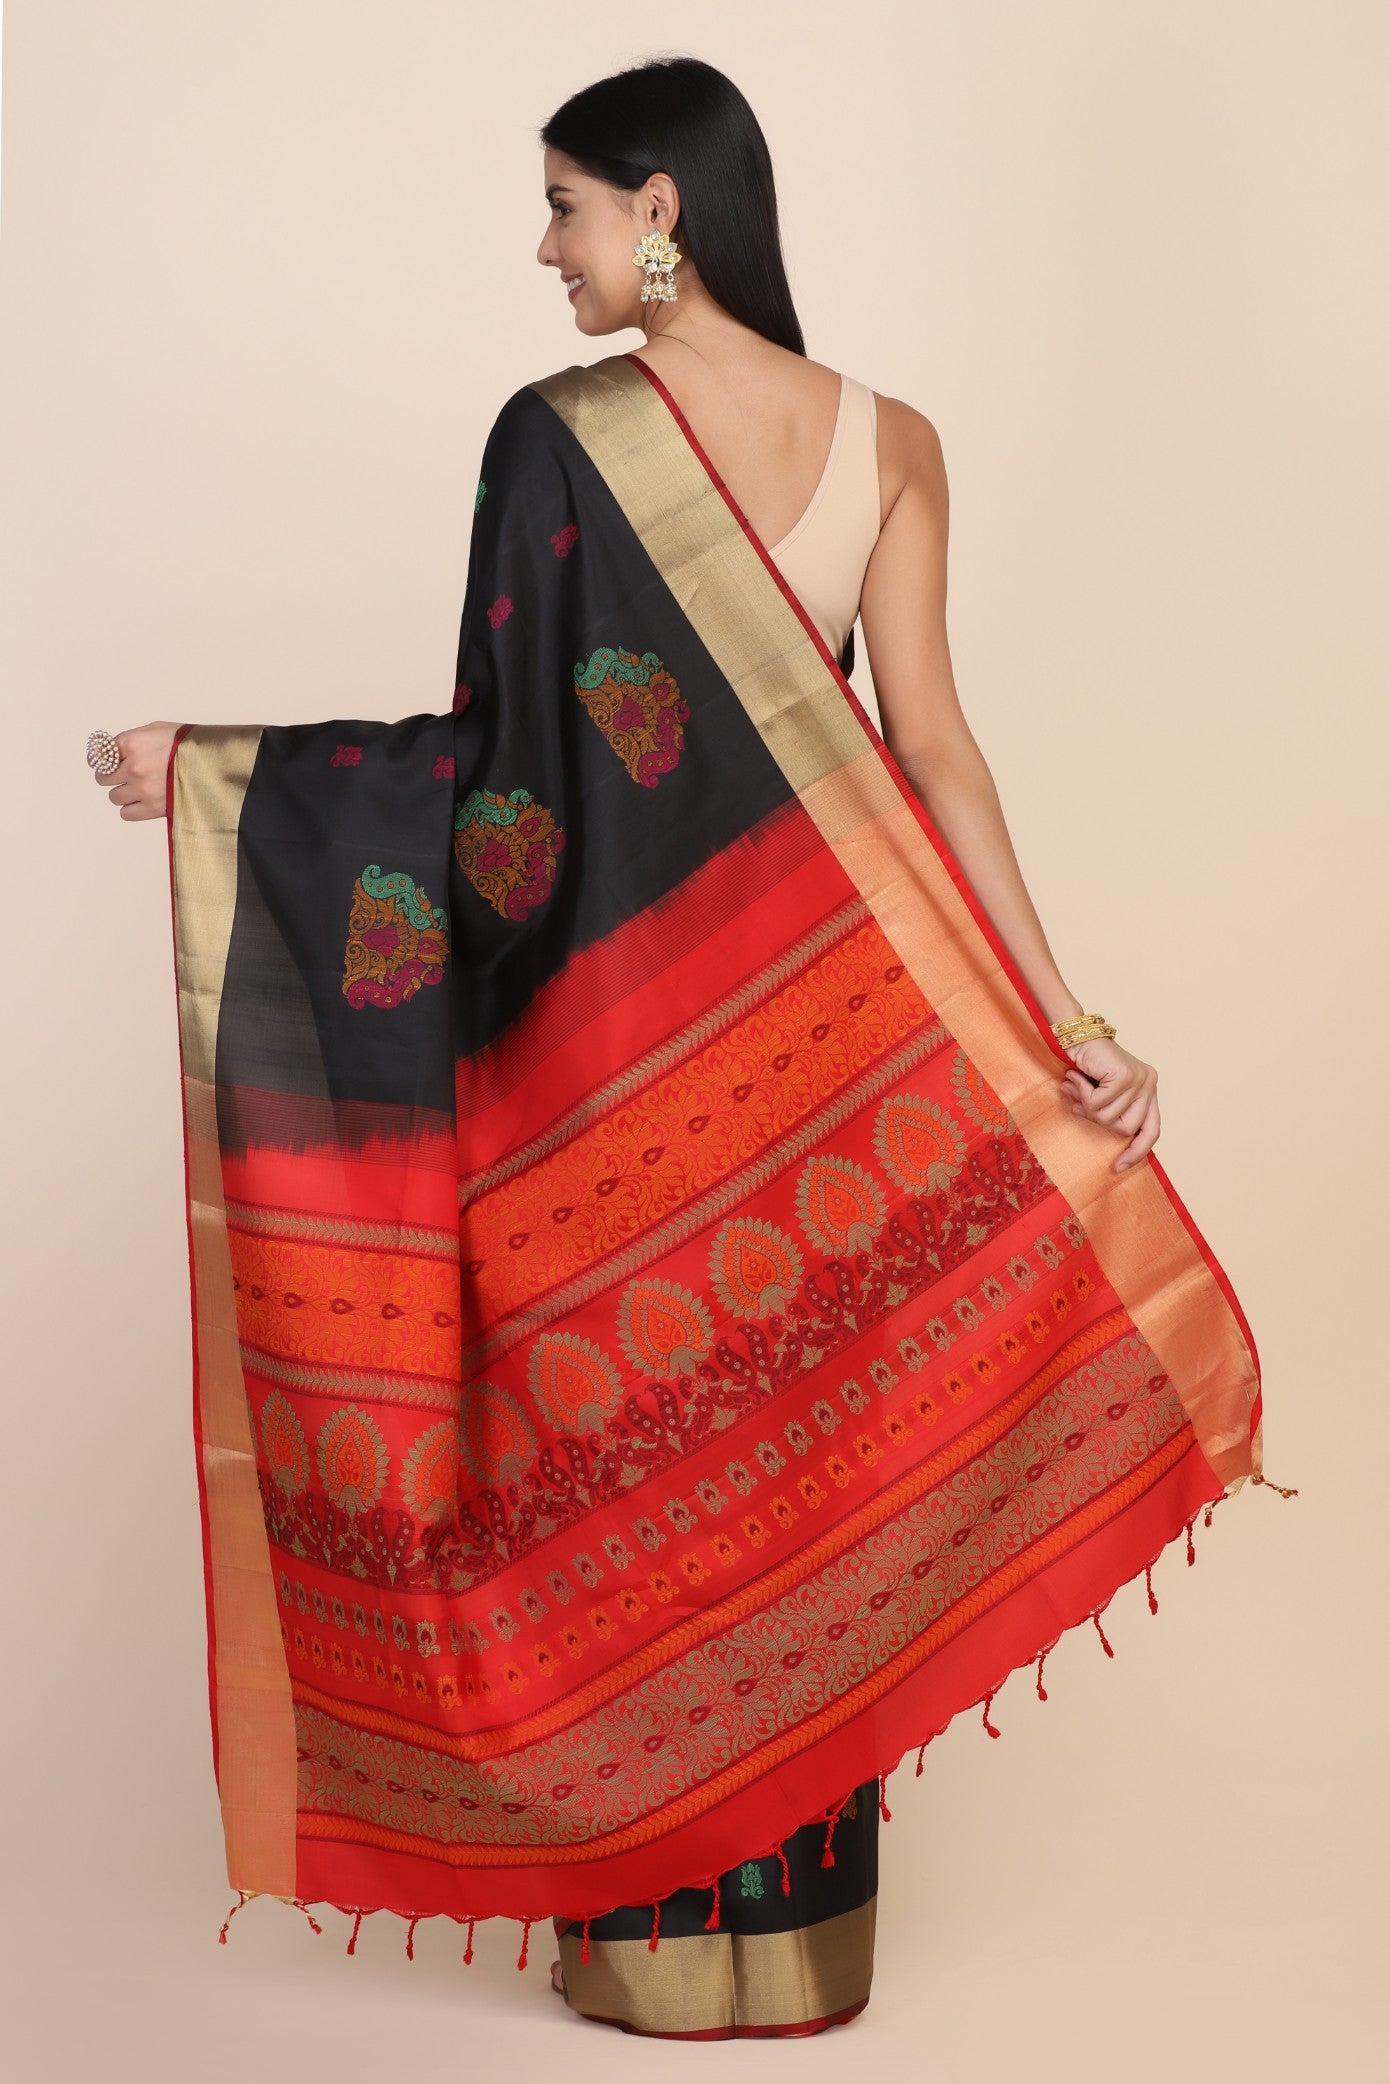 Classic black color floral motif woven saree